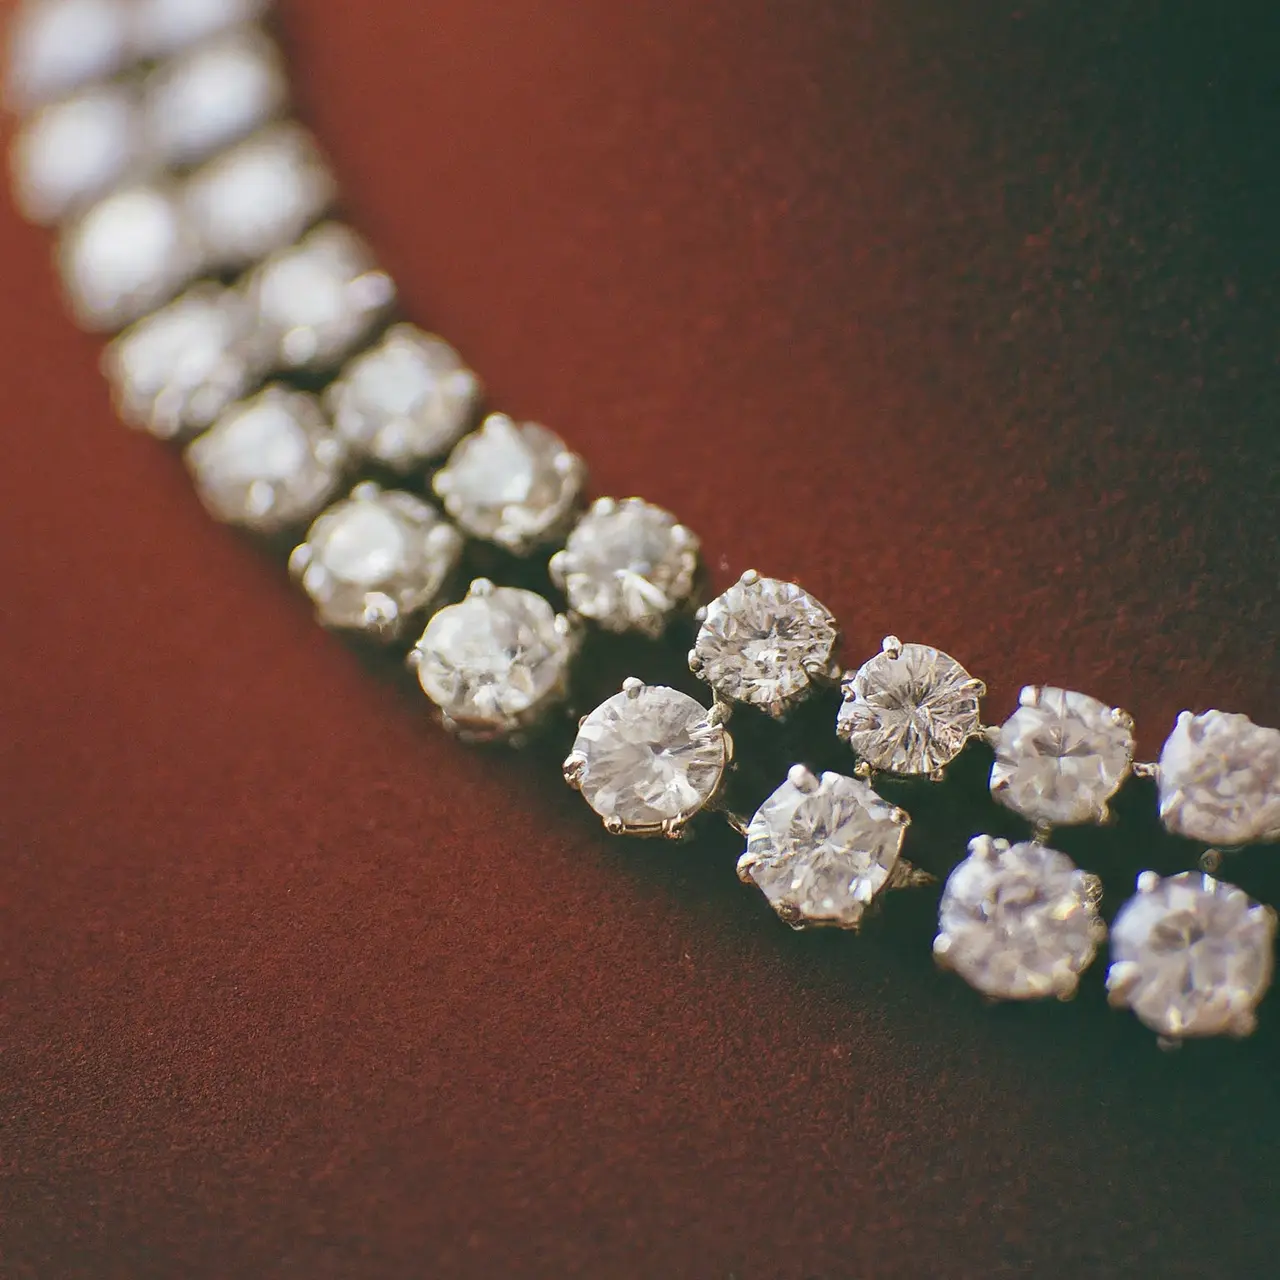 A close-up of a sparkling diamond necklace on velvet. 35mm stock photo